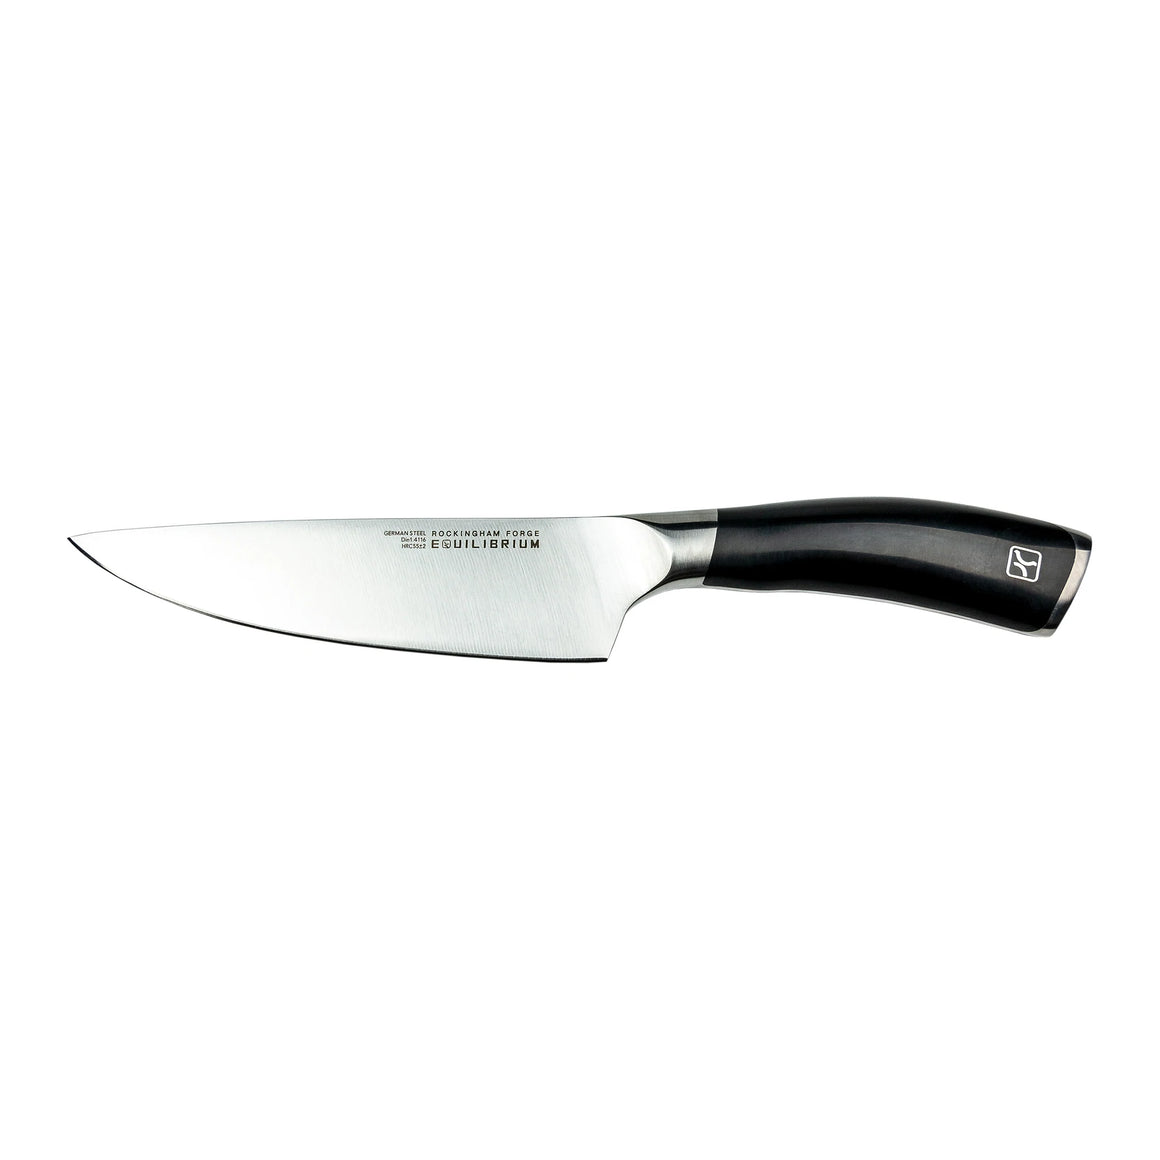 Grunwerg Equilibrium 15cm Chefs Knife